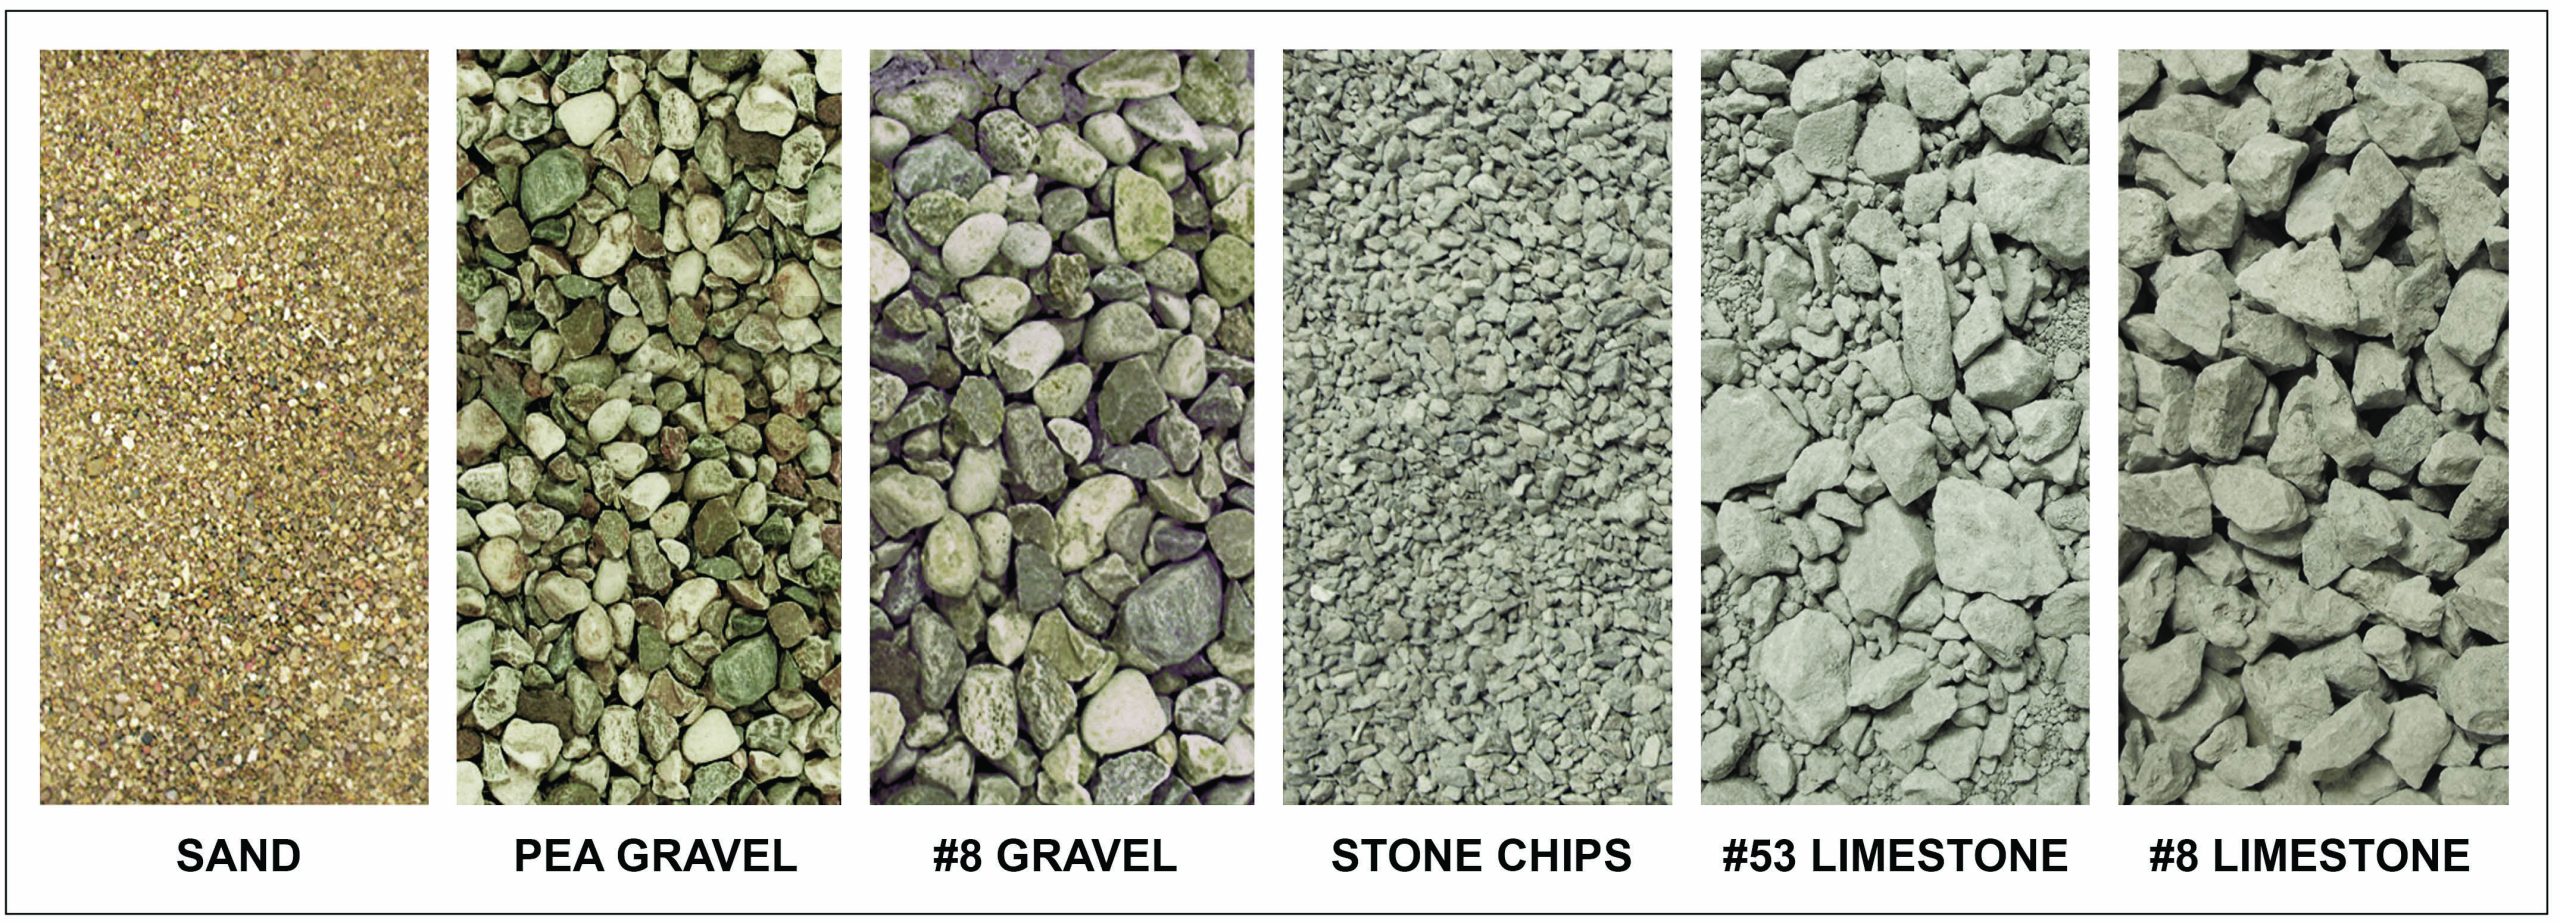 gravel size examples